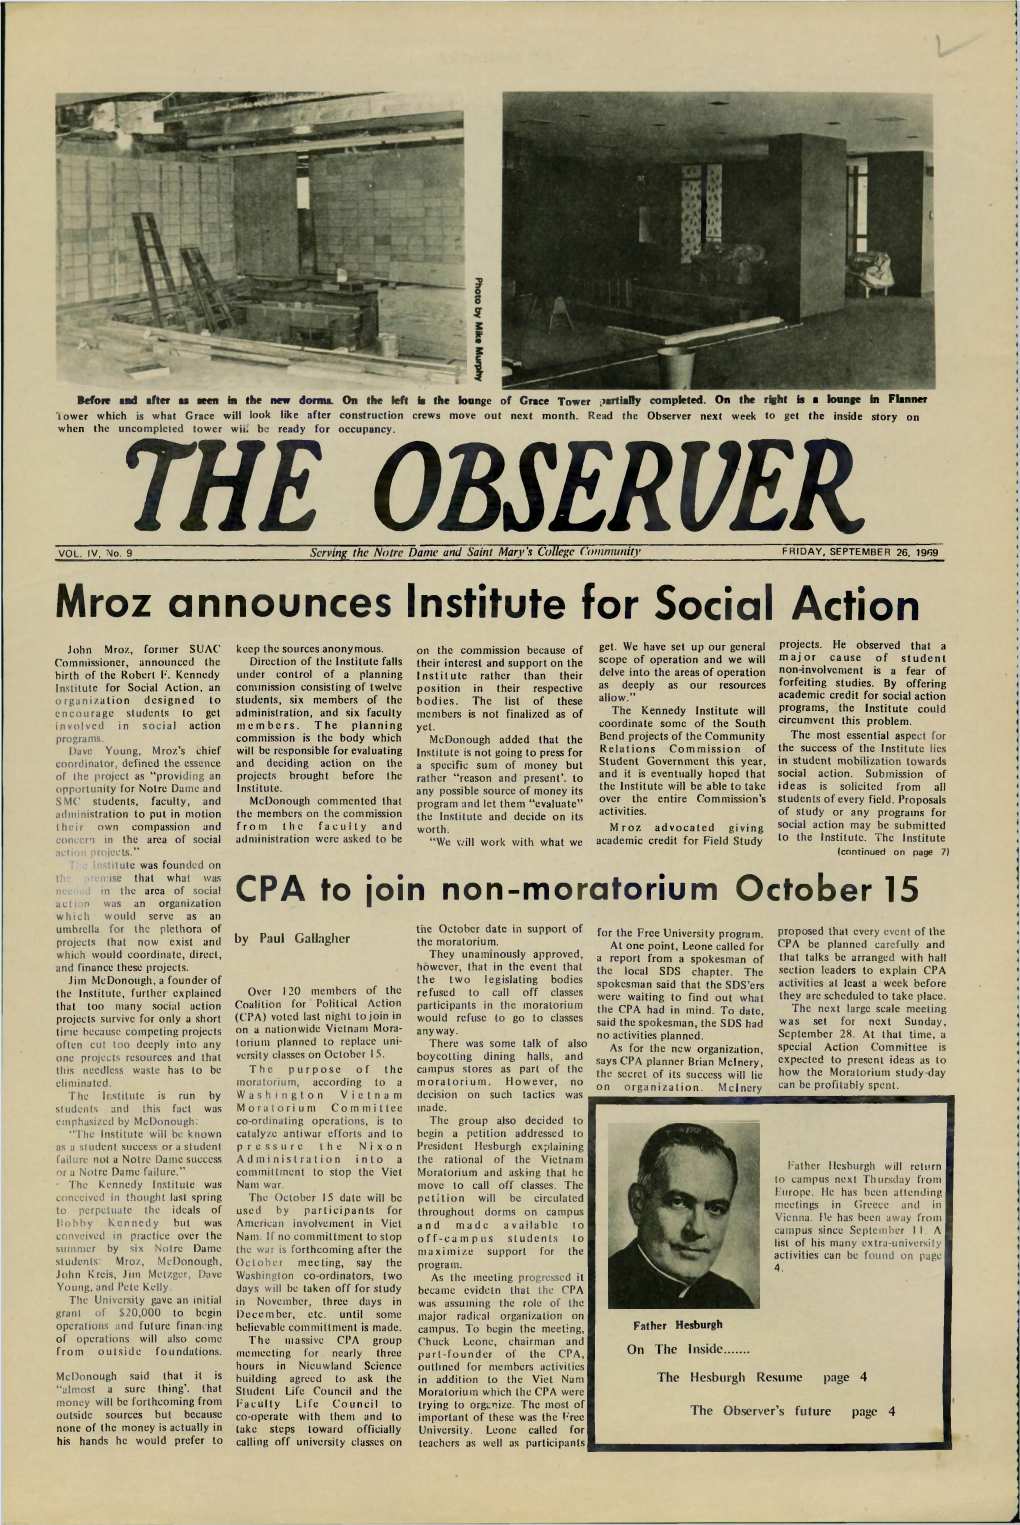 Mroz Announces Institute for Social Action